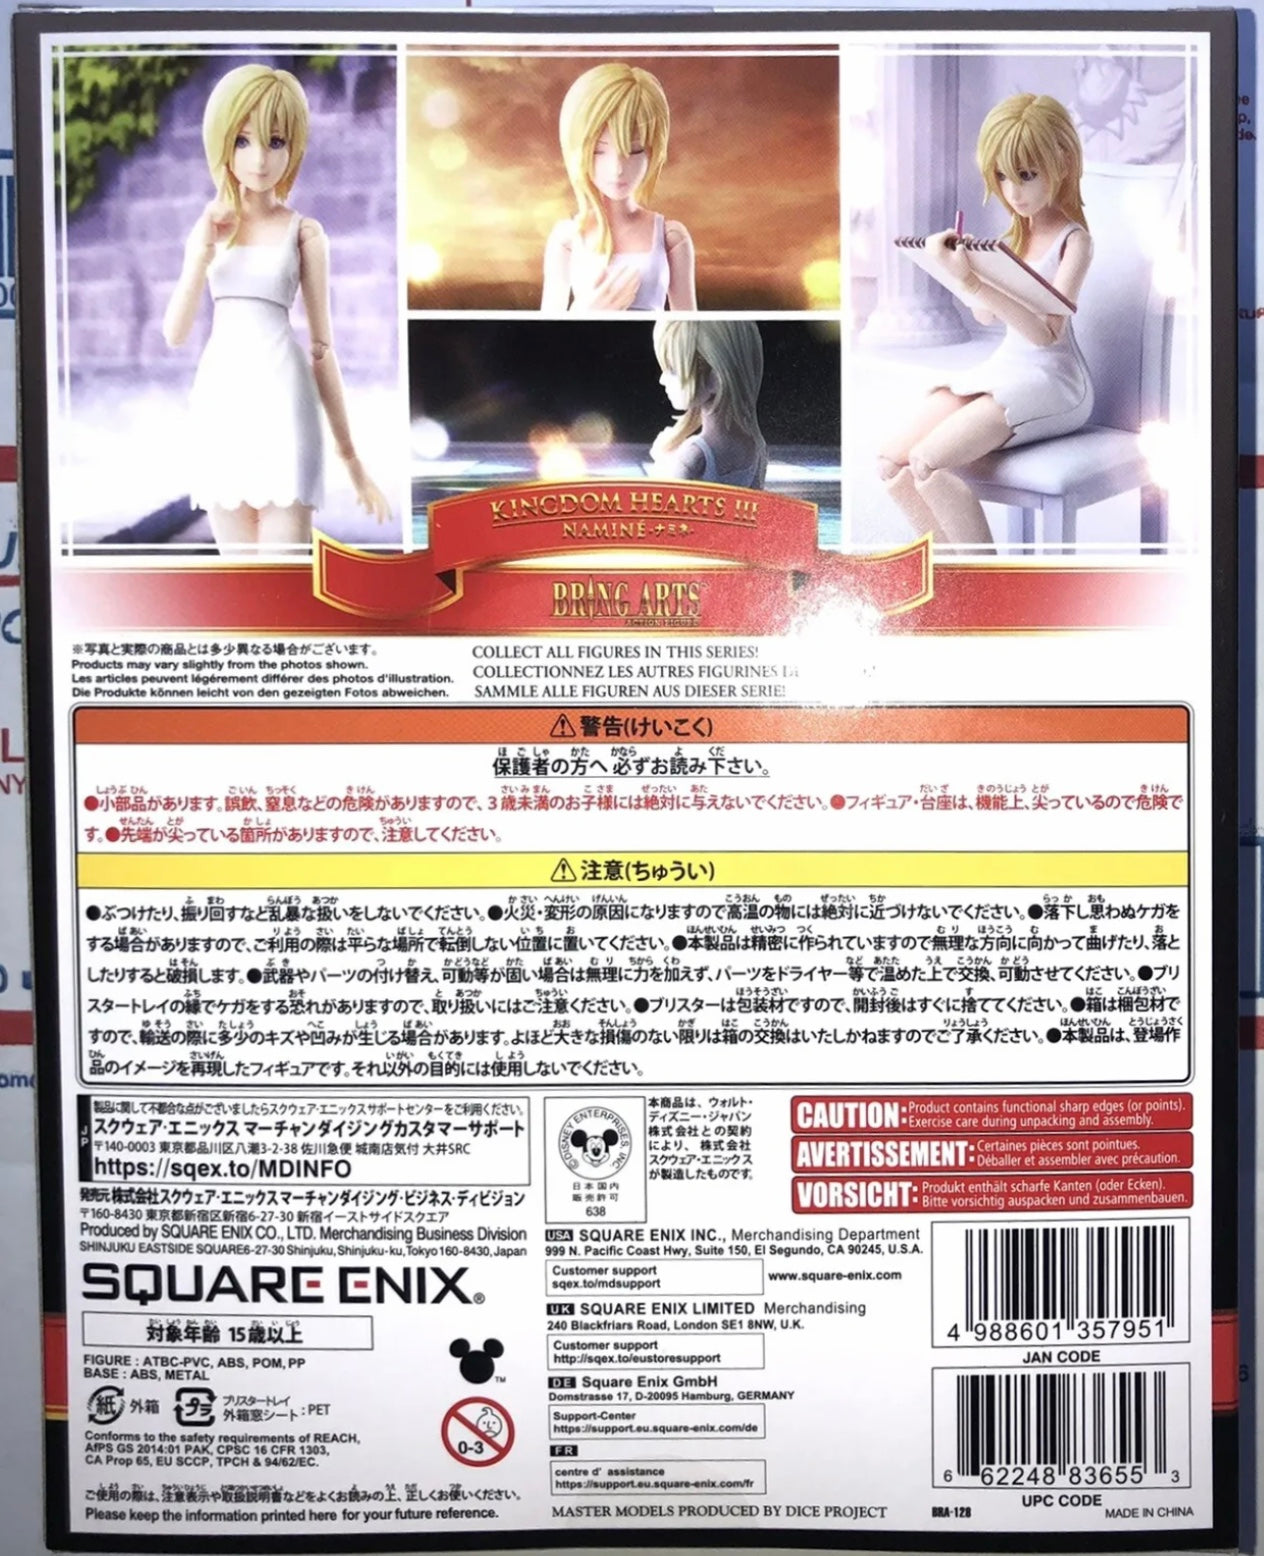 Bring Arts Namine Kingdom Hearts III (3) Action Figure